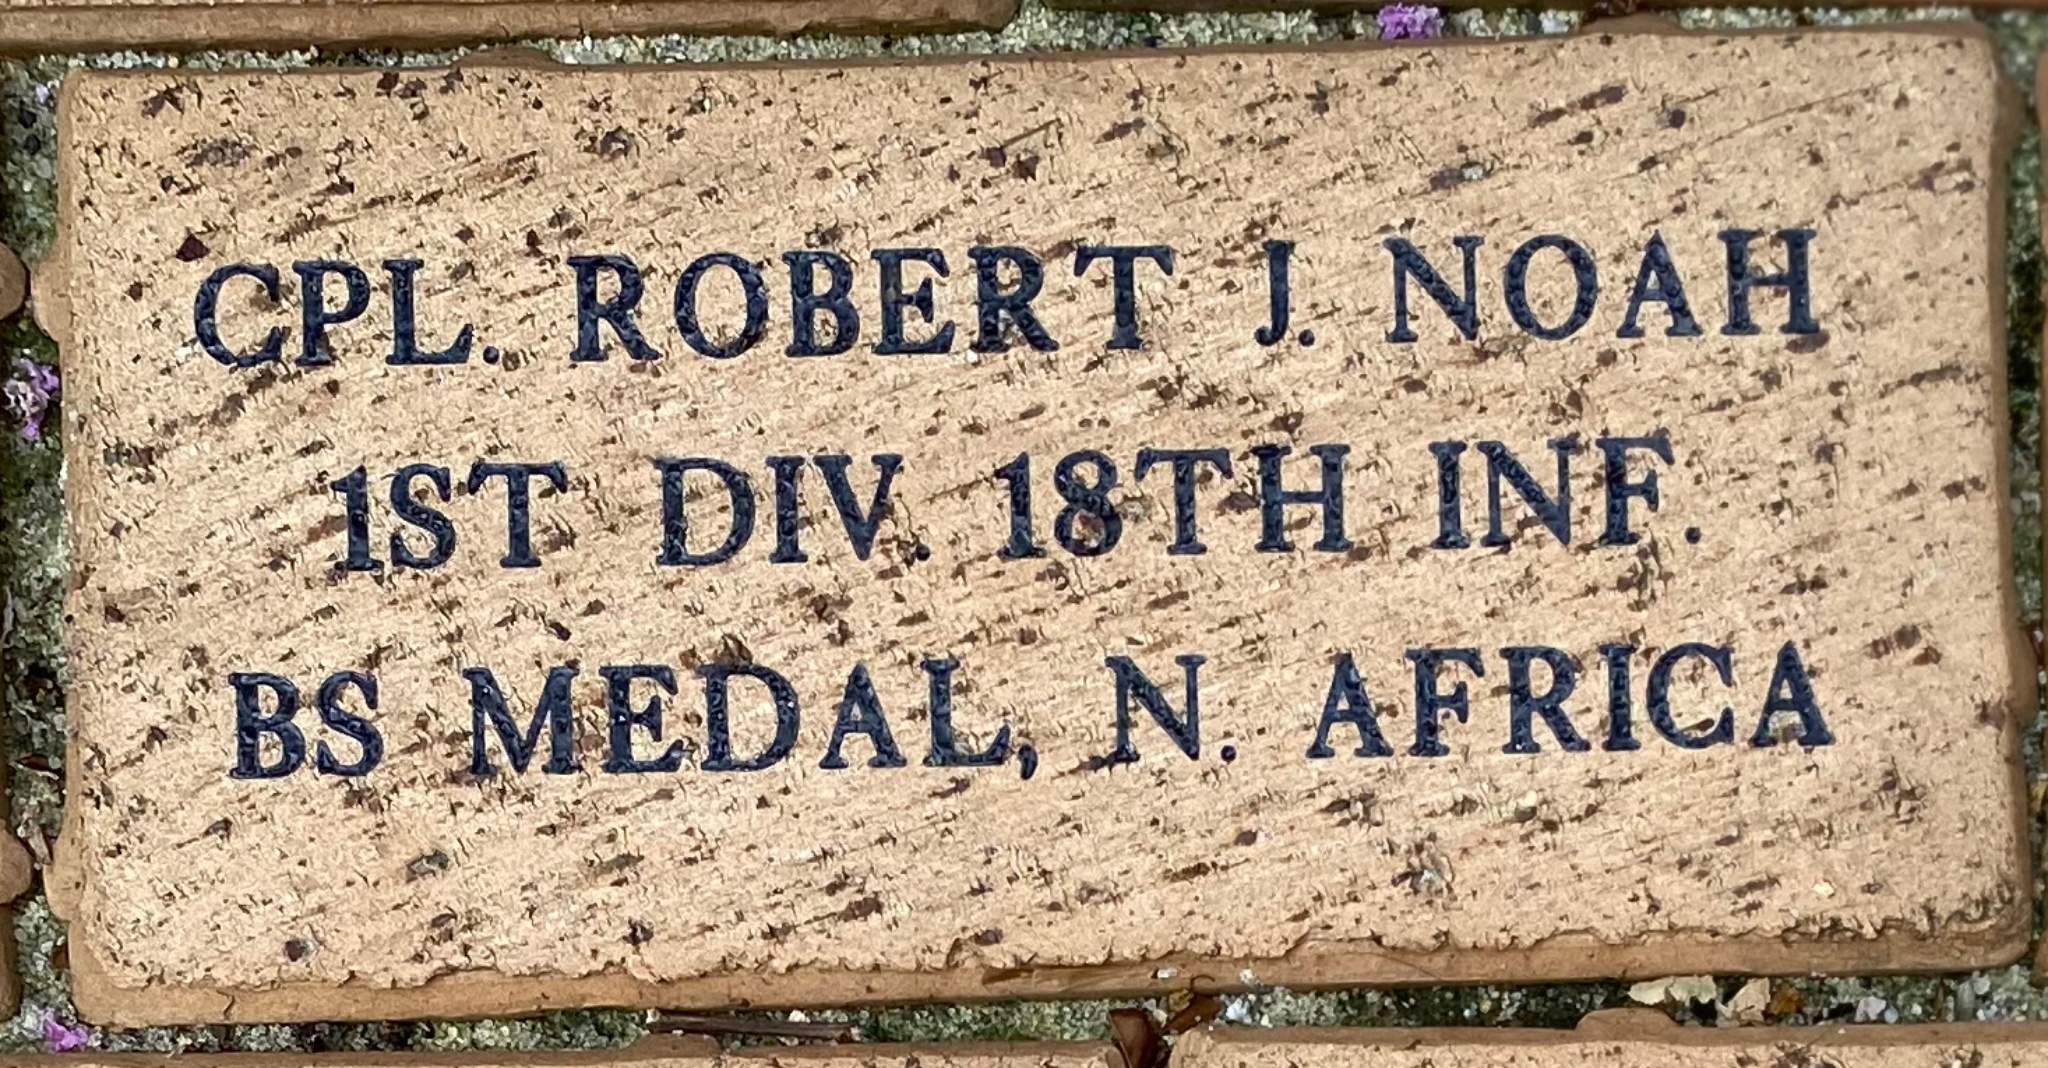 CPL. ROBERT J. NOAH 1ST DIV. 18TH INF. BS MEDAL, N. AFRICA